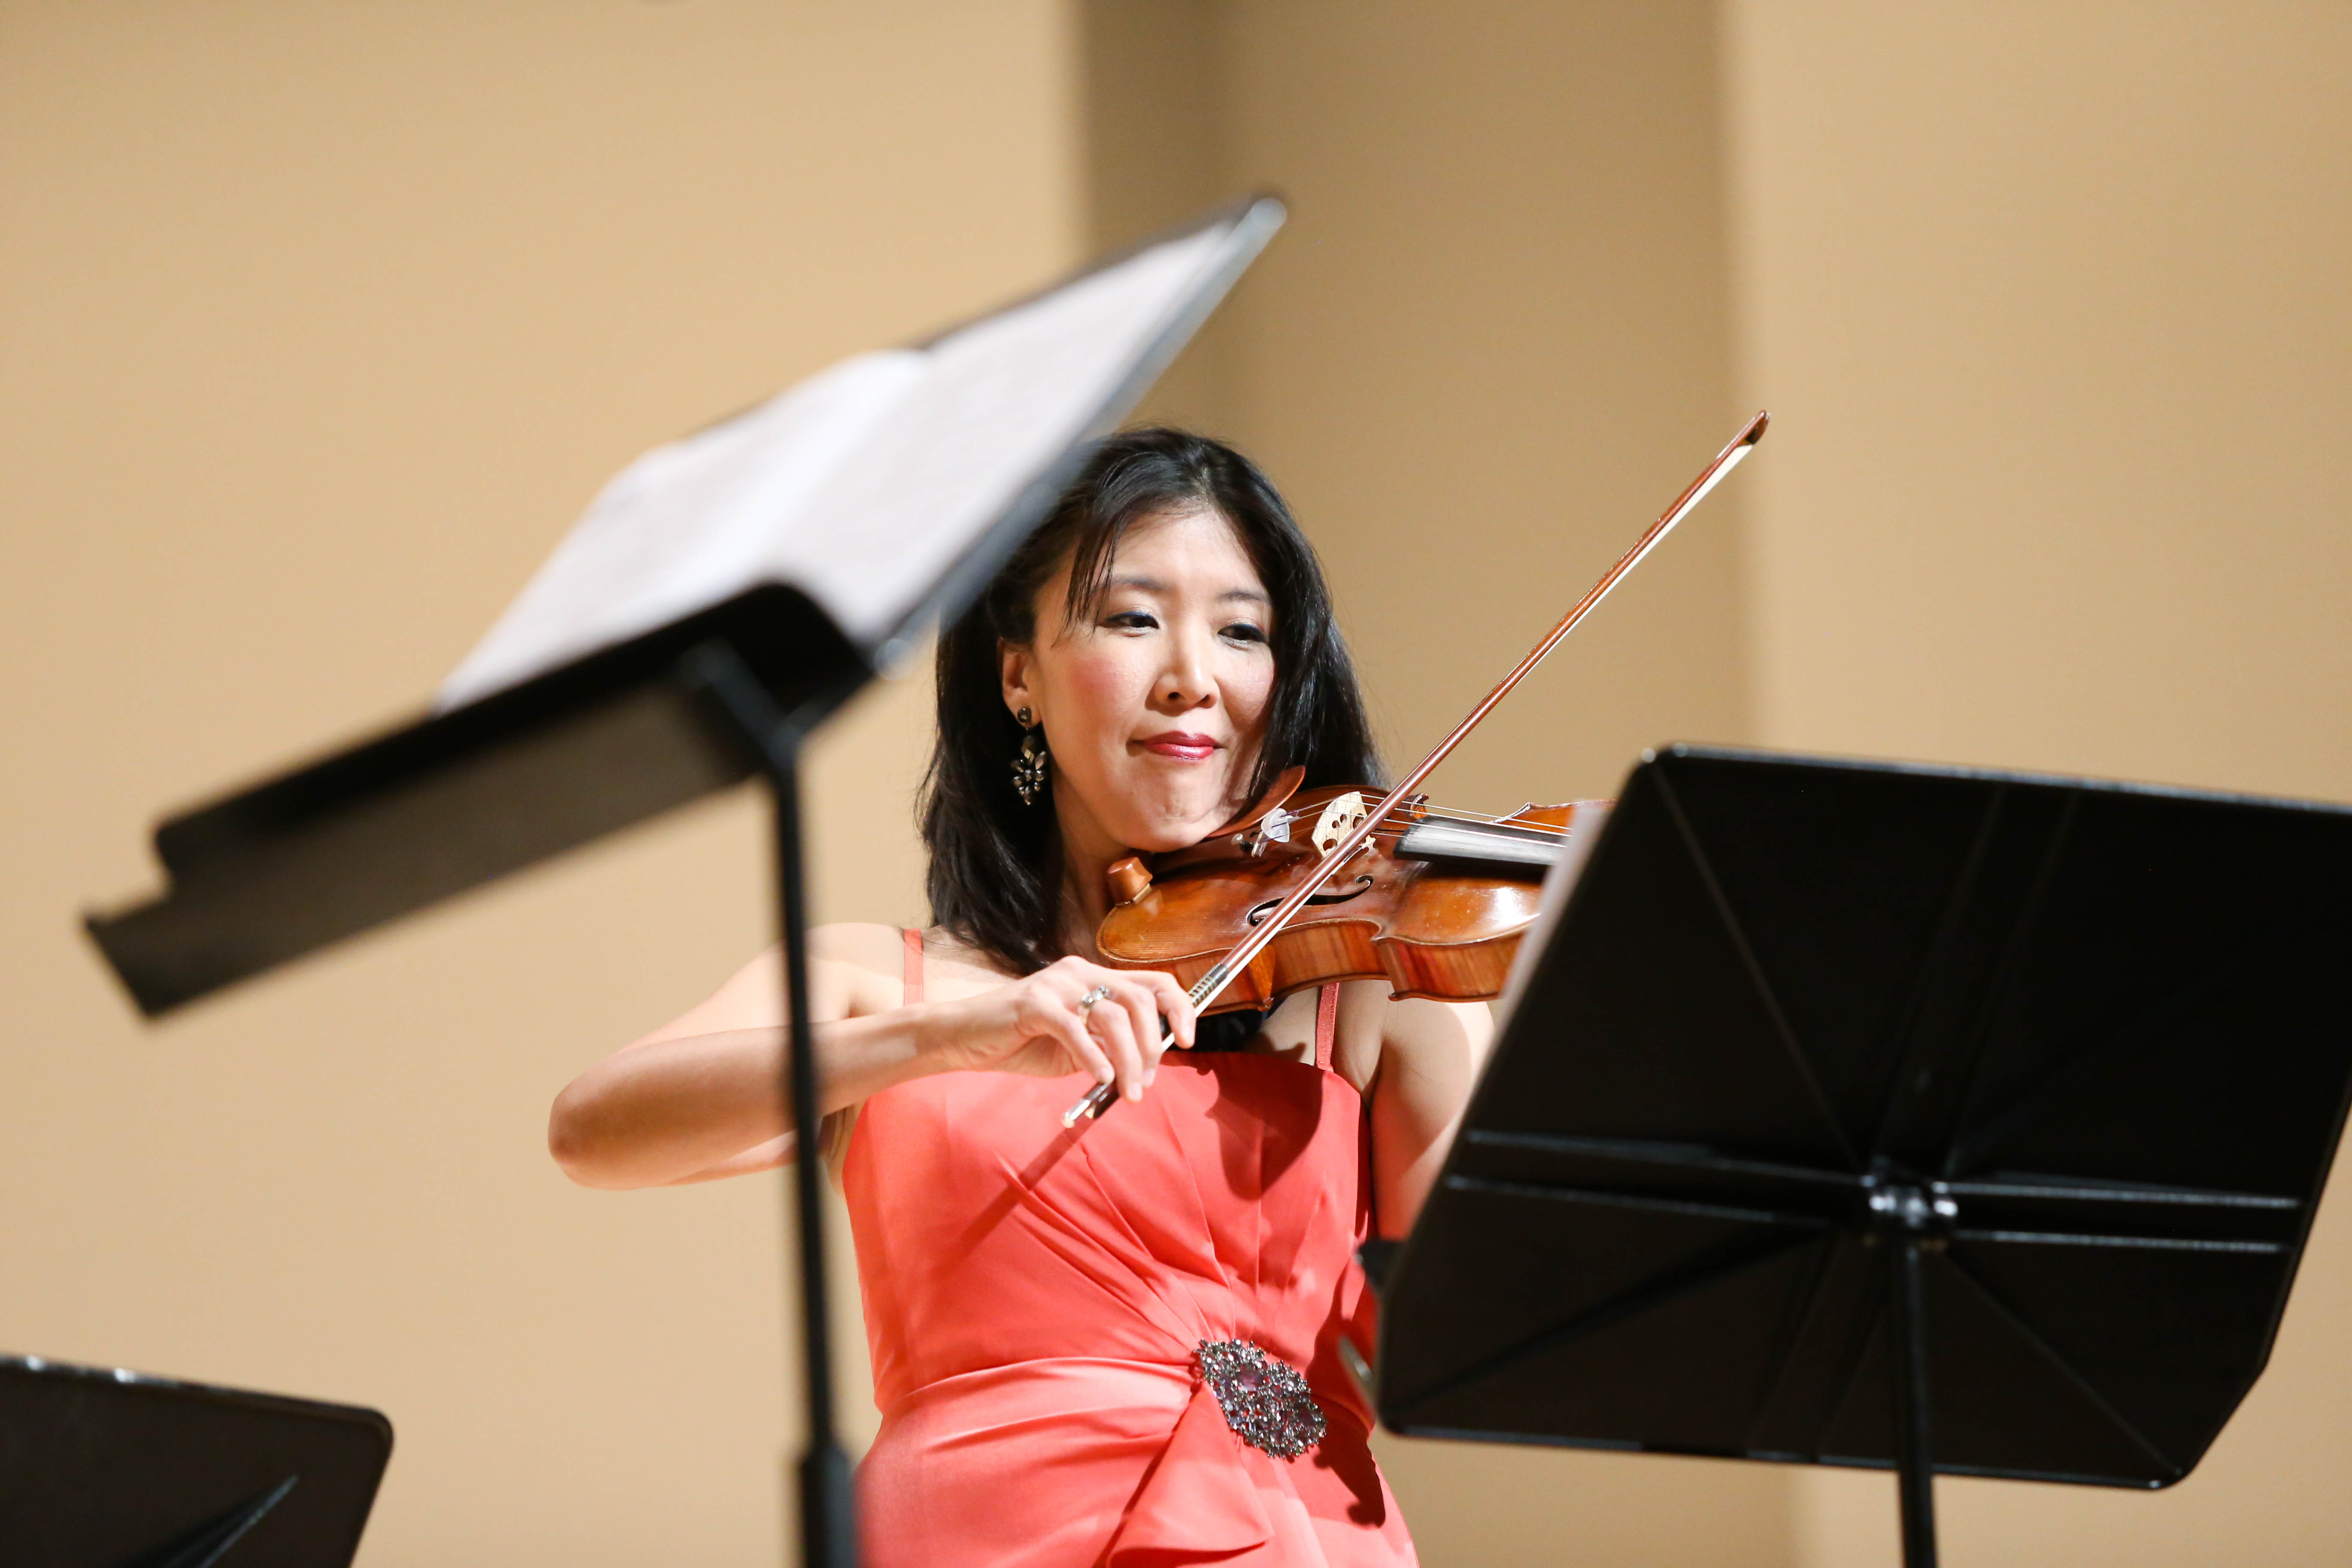 KSU’s Bailey Performance Center displays timelessness of classical music